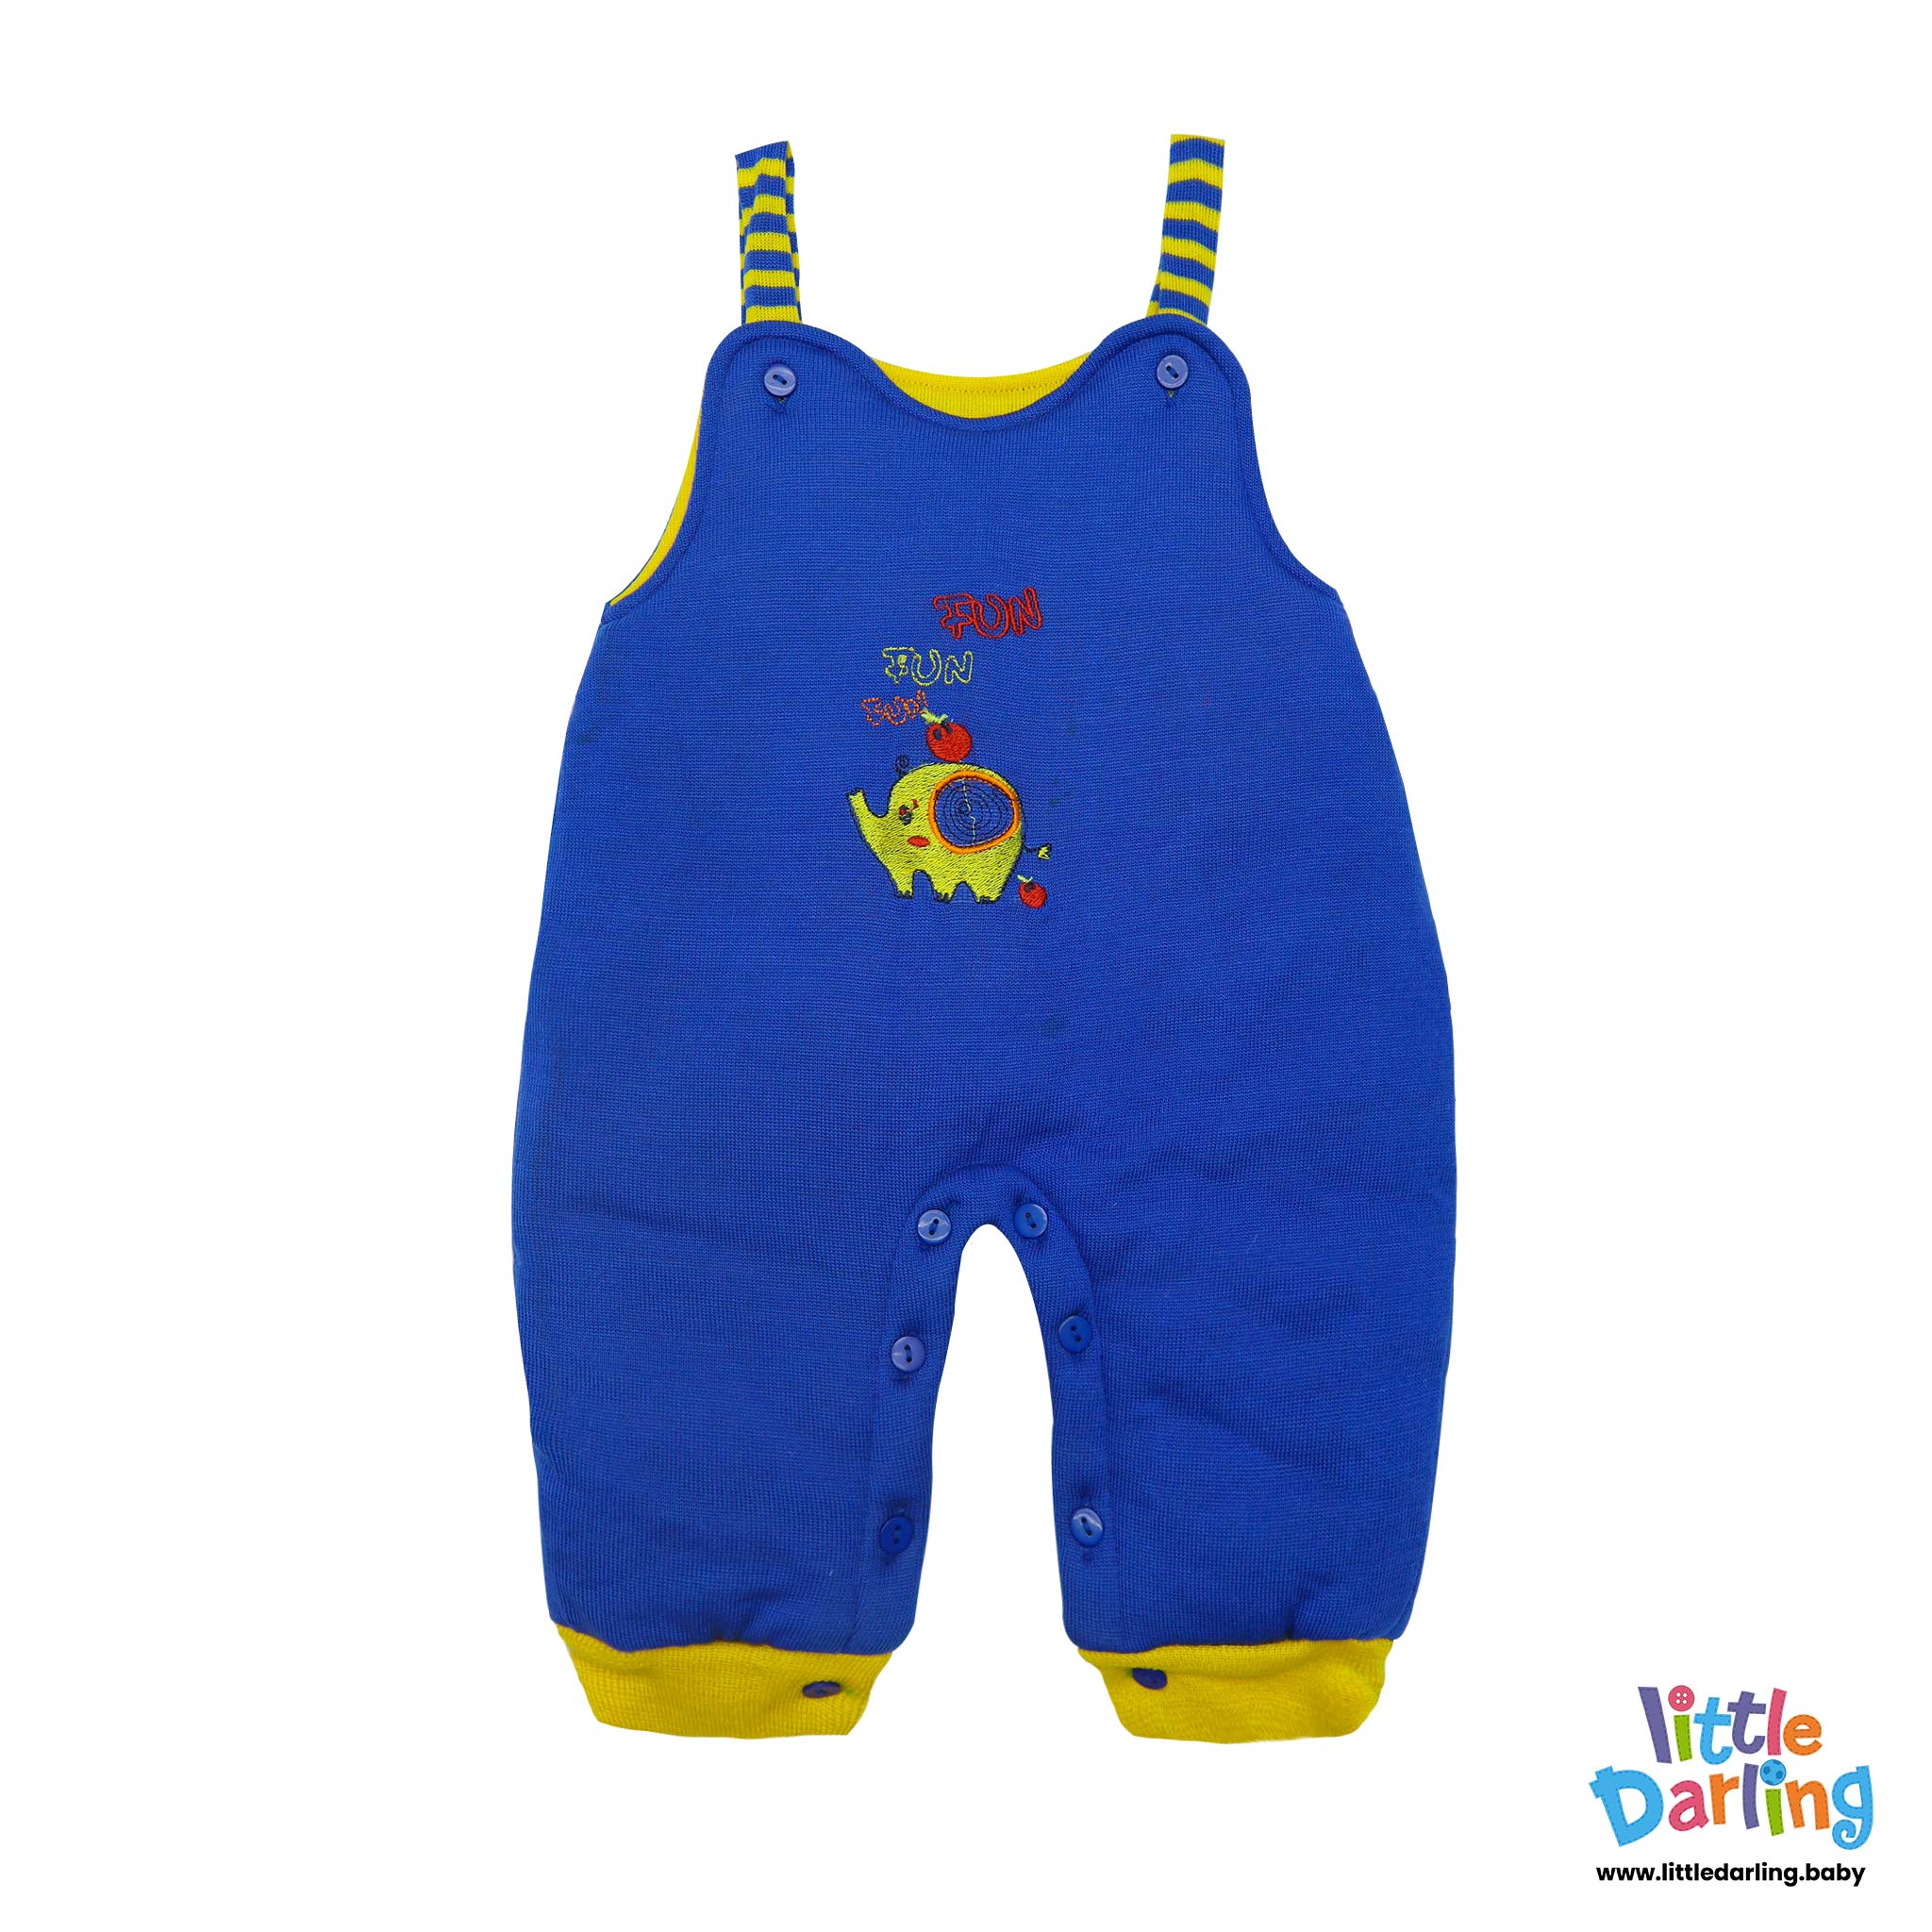 Woolen Jumpsuit Yellow Stripes Blue Color by Little Darling